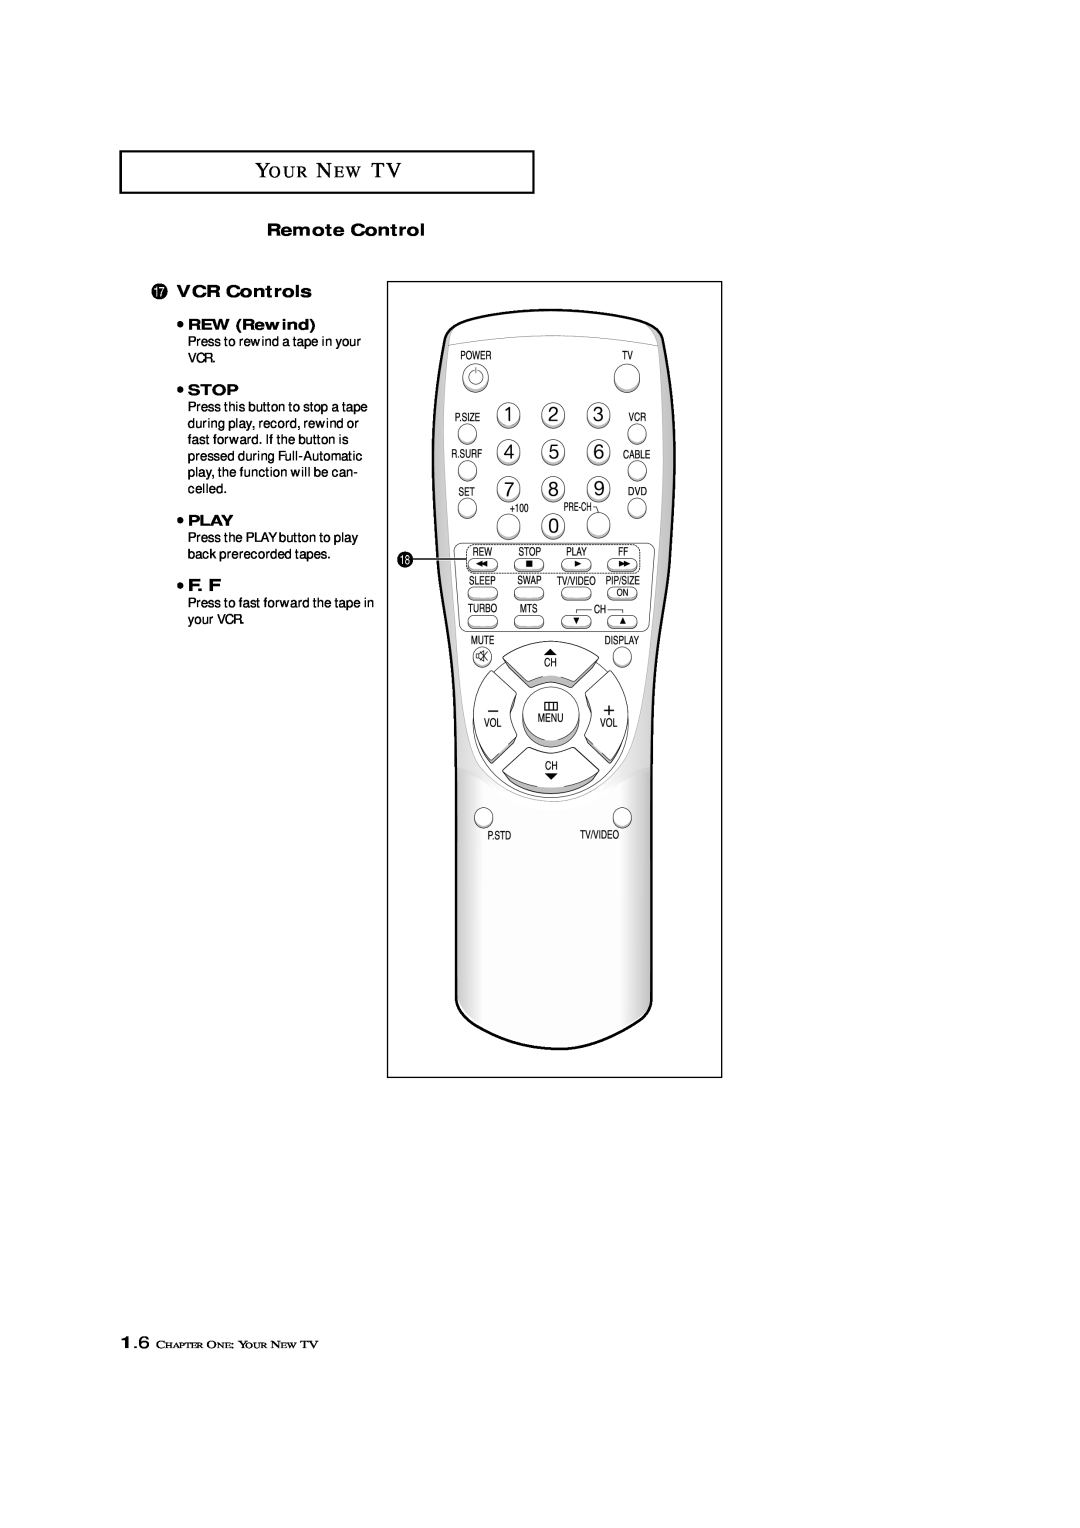 Samsung TXL 3276, TXL 3676 Remote Control ˜ VCR Controls, F. F, REW Rewind, Press to rewind a tape in your VCR, Stop, Play 